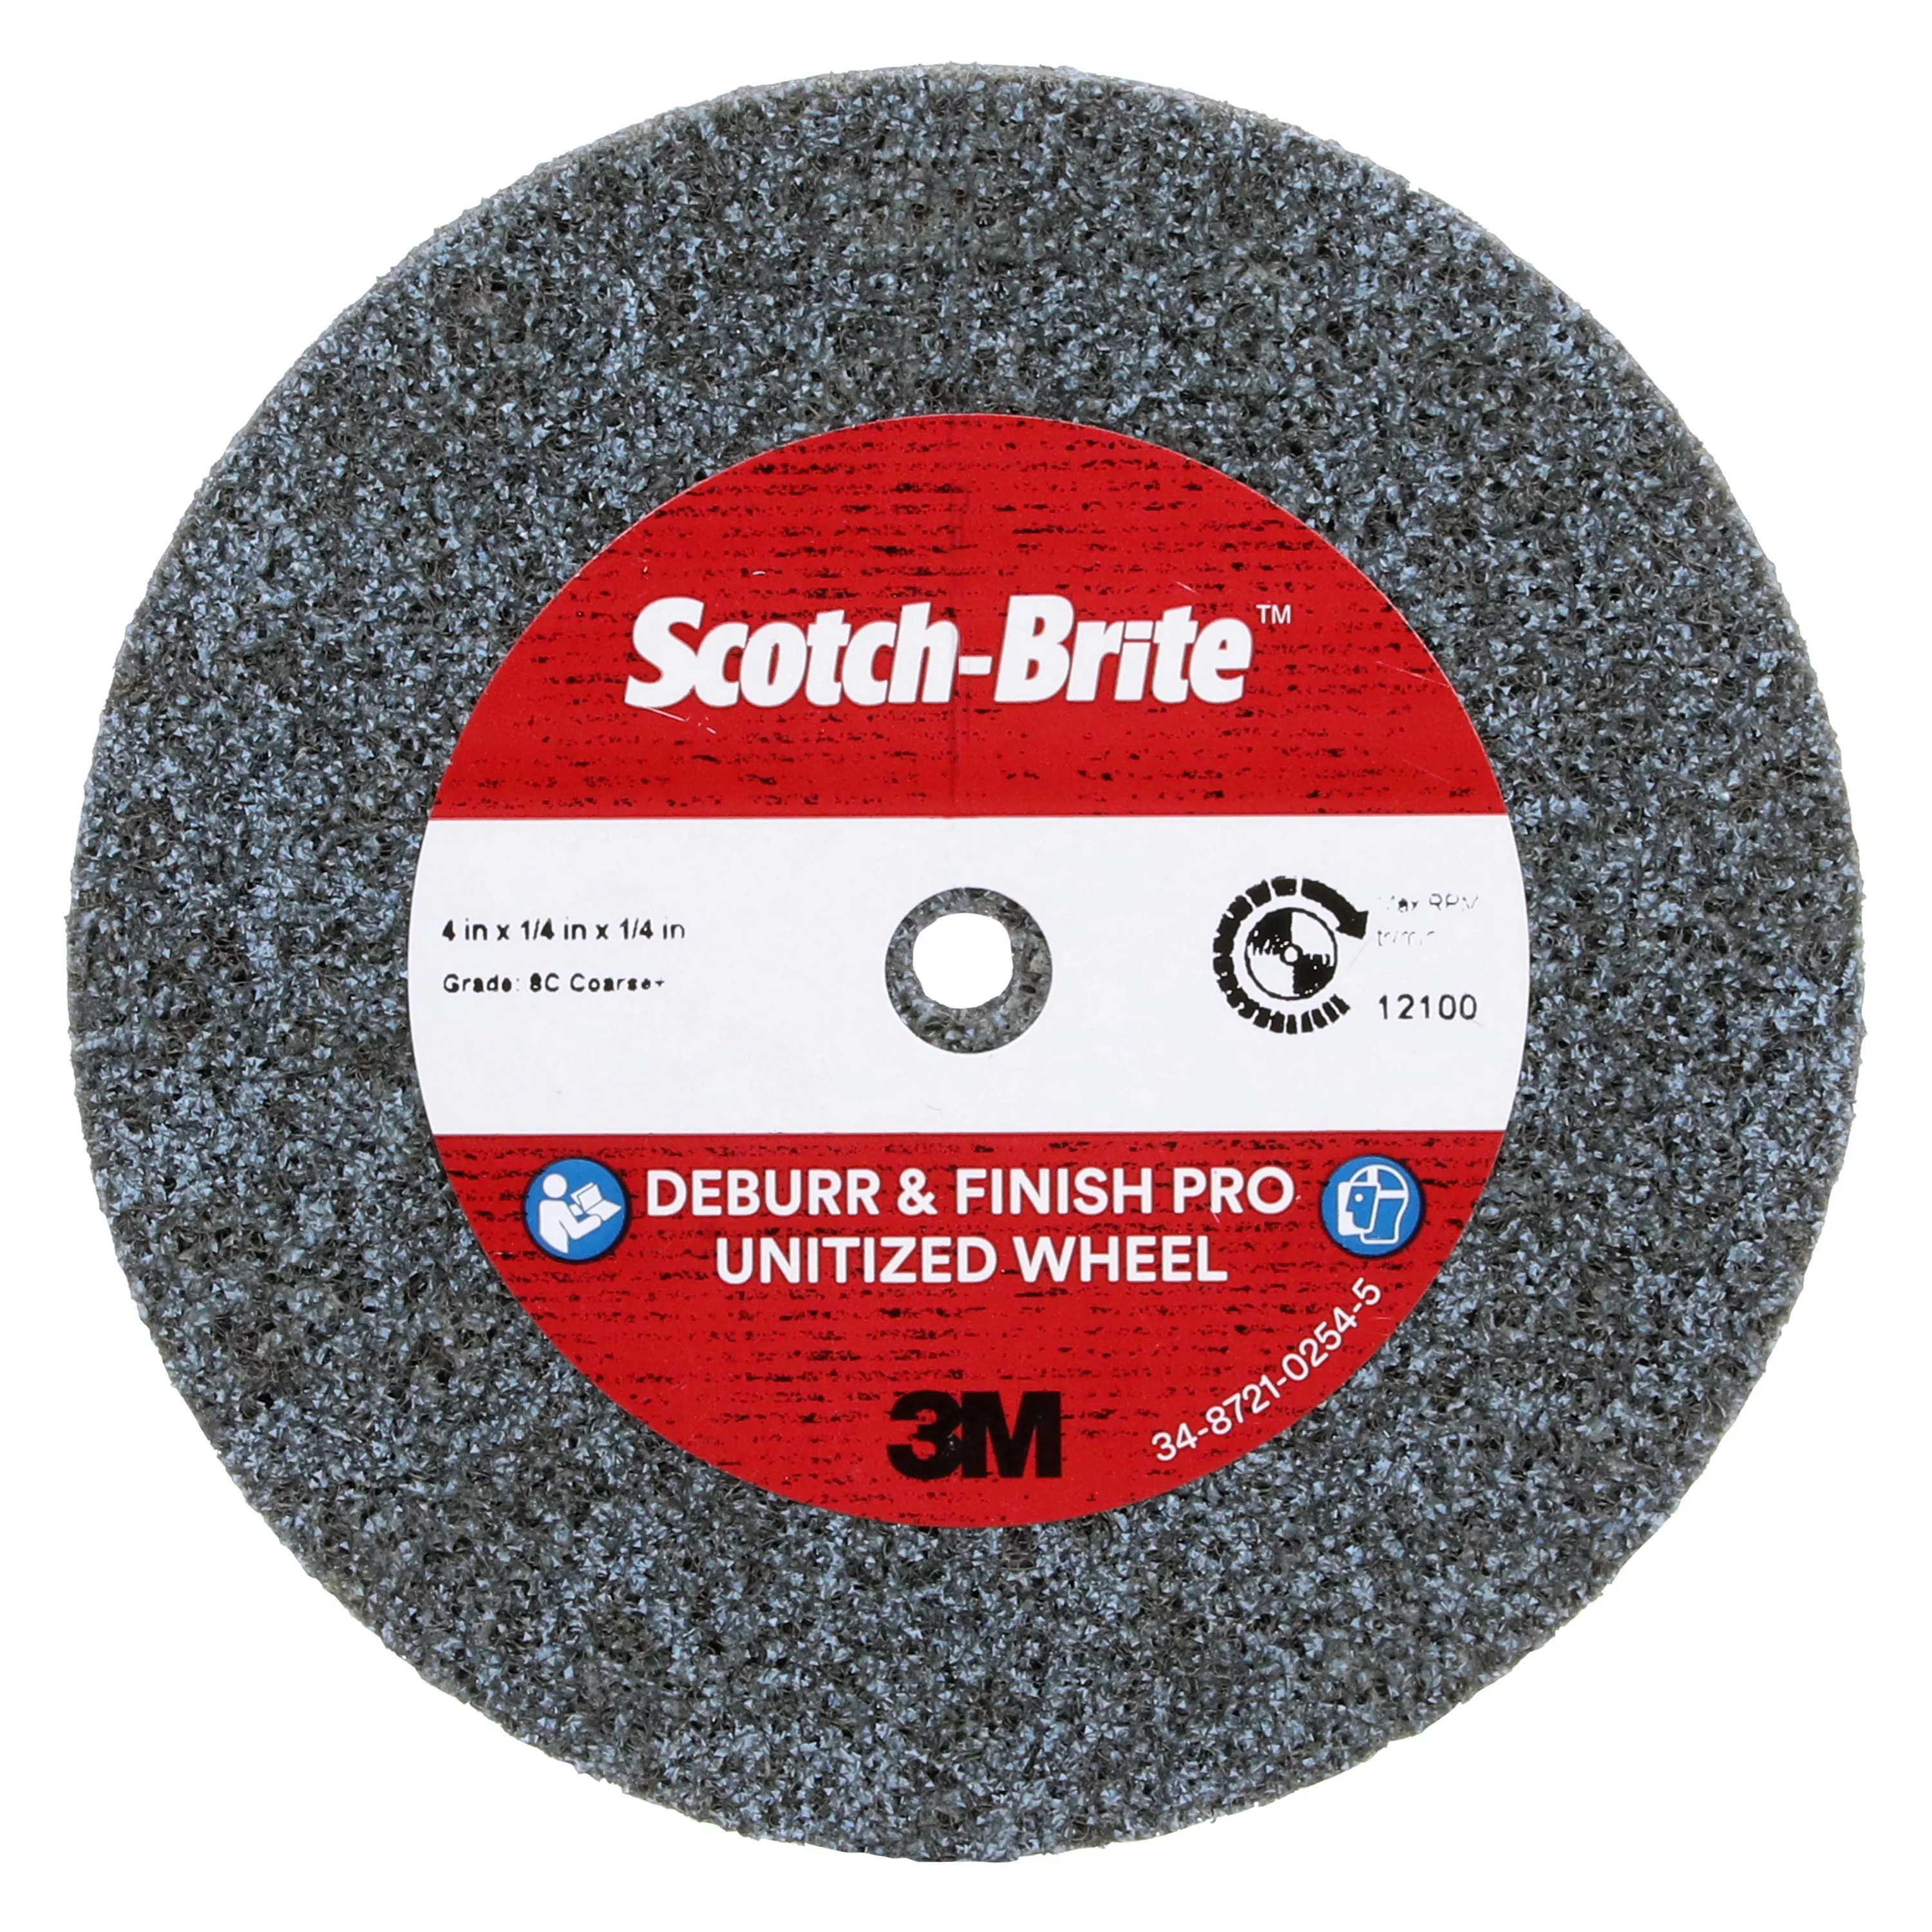 Scotch-Brite™ Deburr & Finish Pro Unitized Wheel, DP-UW, 8C Coarse+, 4
in x 1/4 in x 1/4 in